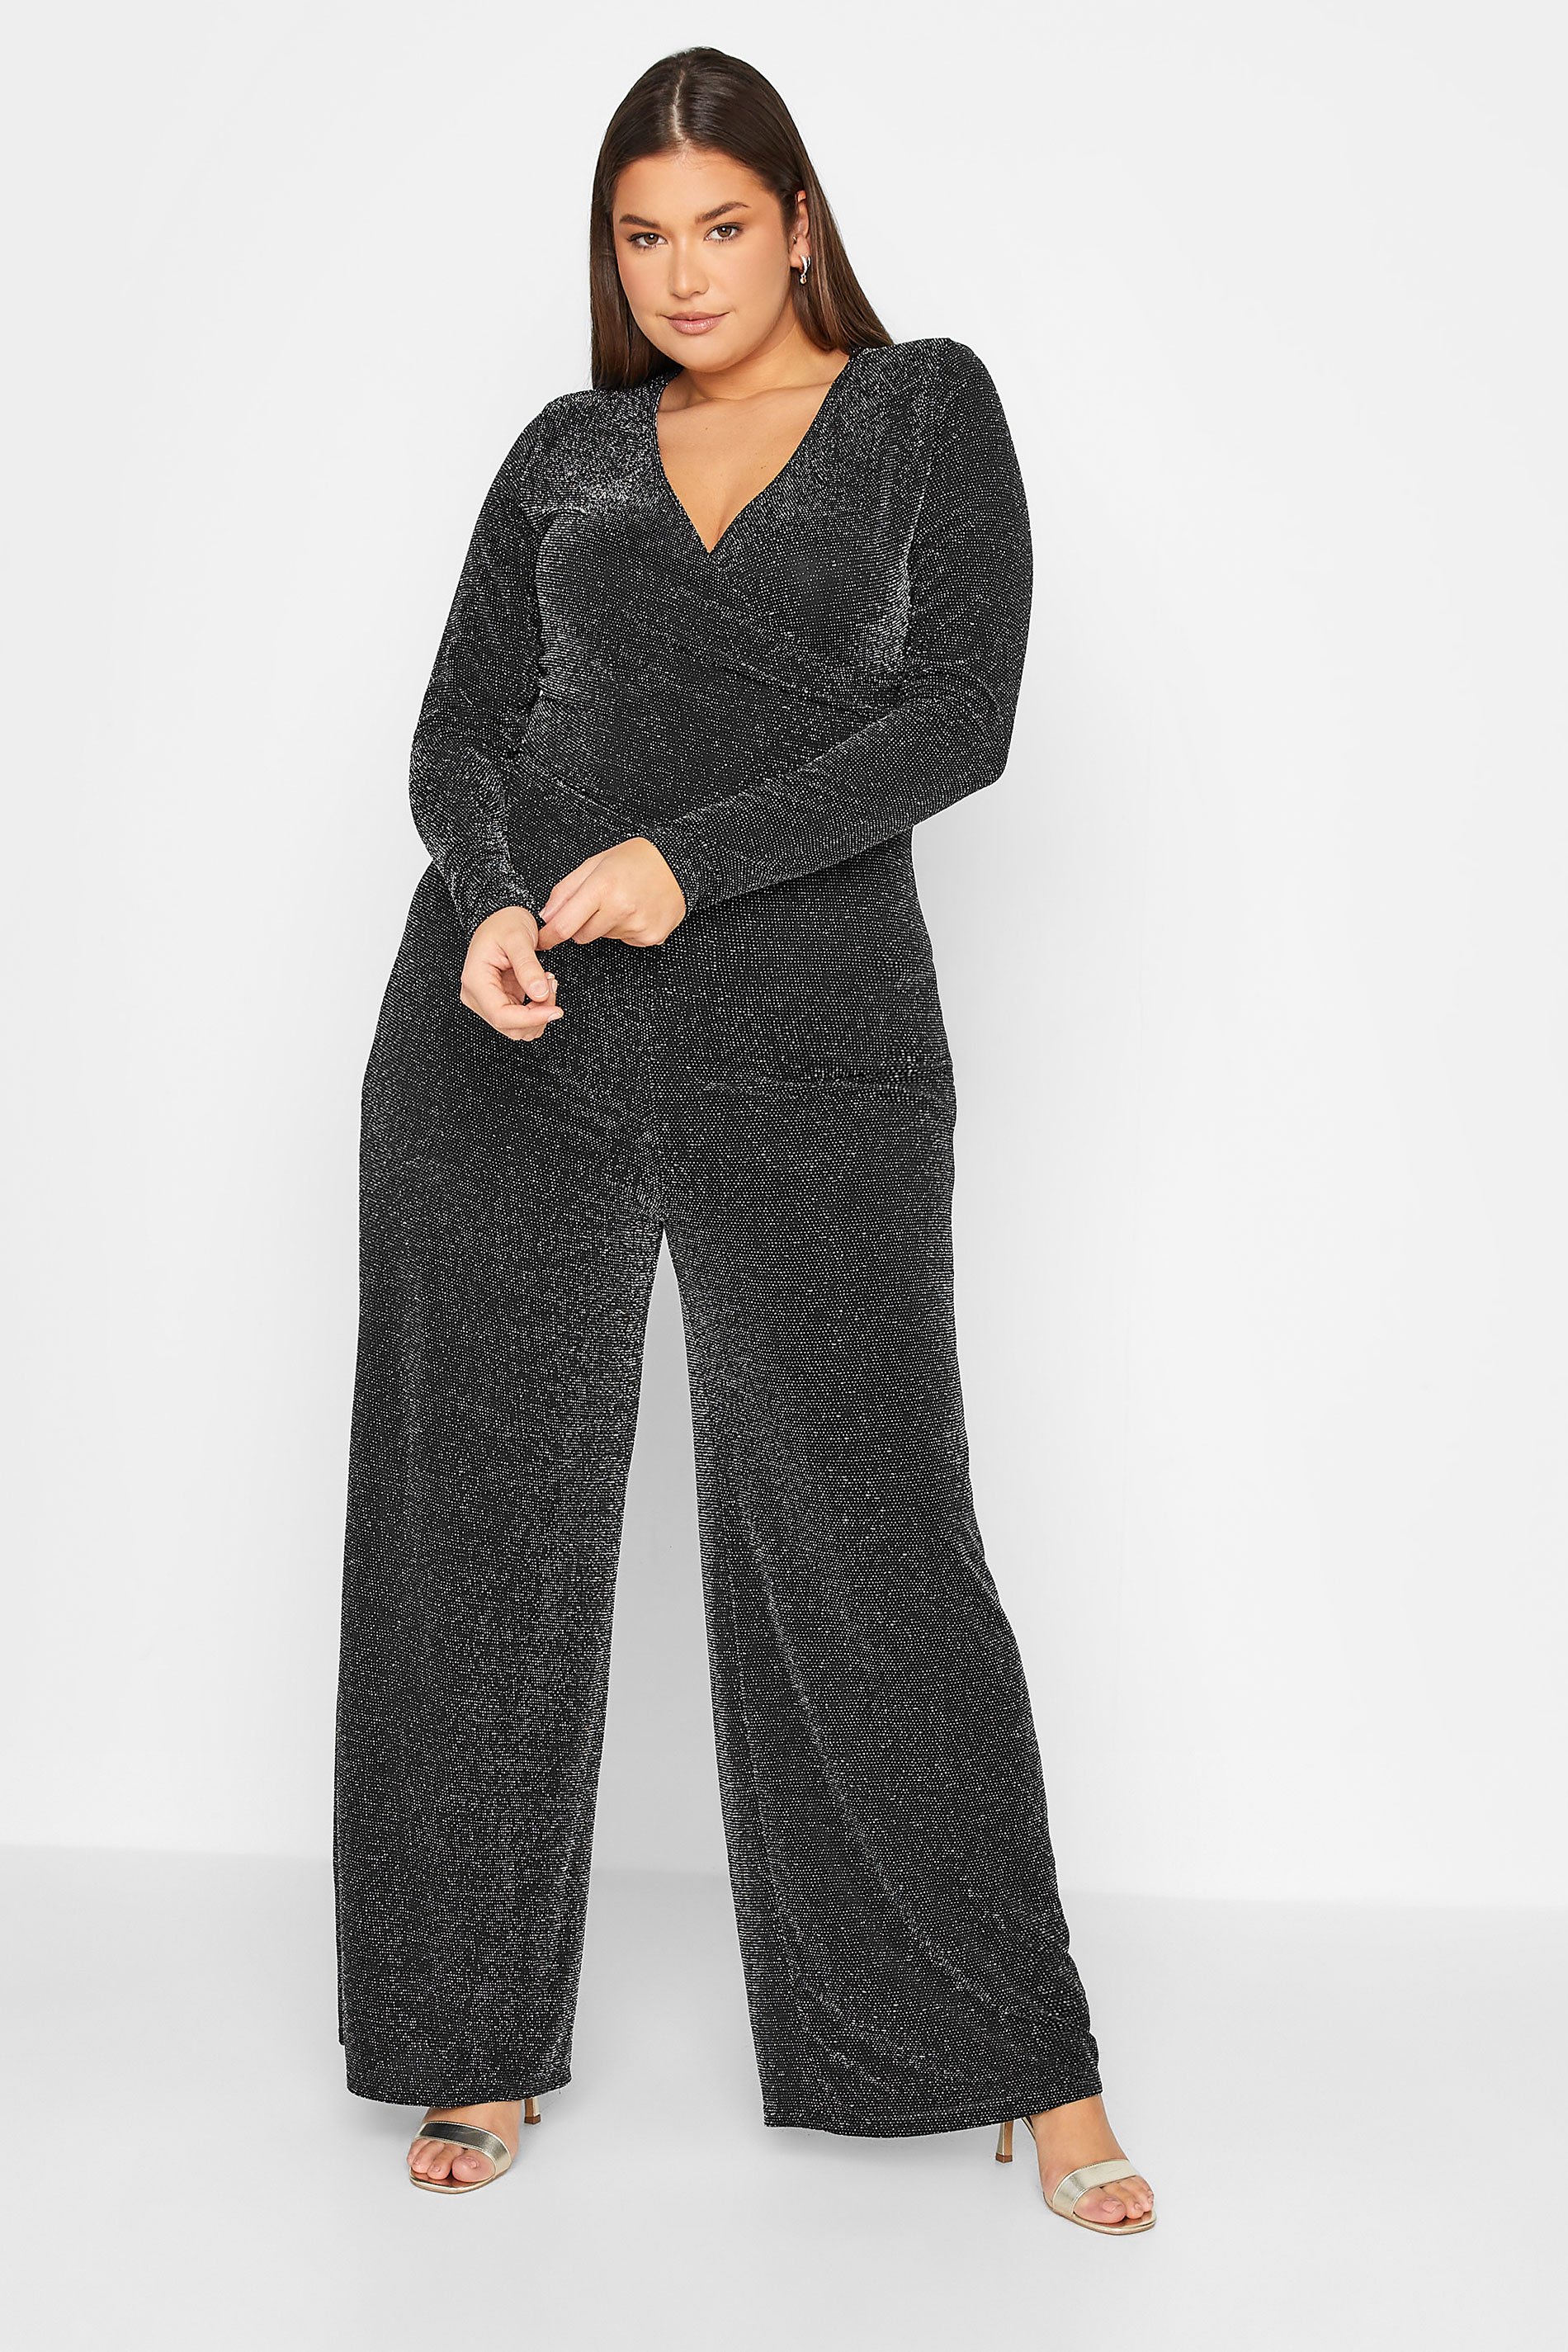 LTS Tall Women's Black & Silver Glitter Wrap Jumpsuit | Long Tall Sally 1